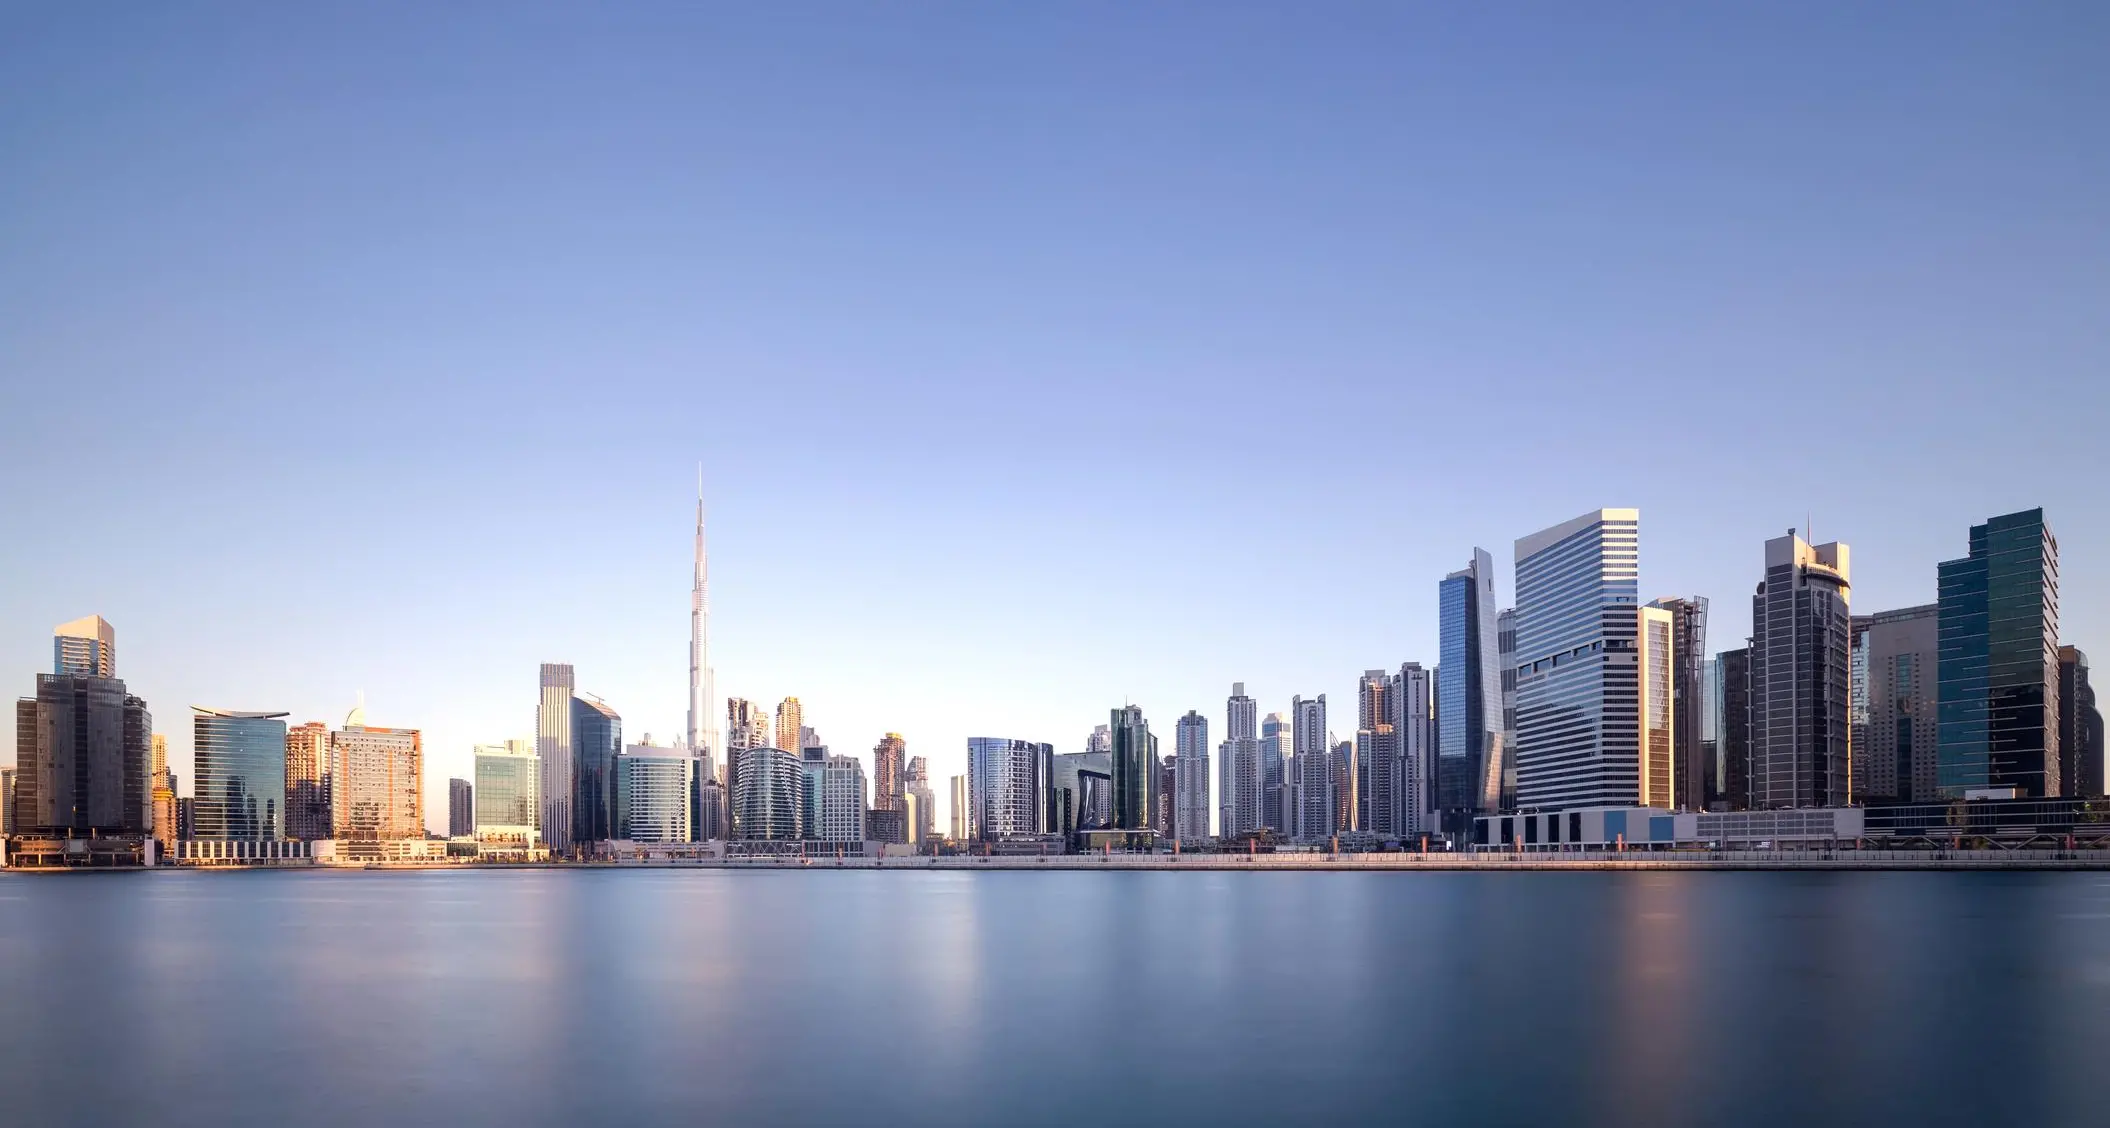 Dubai's entrepreneurial spirit will help real estate recover quickly - expert